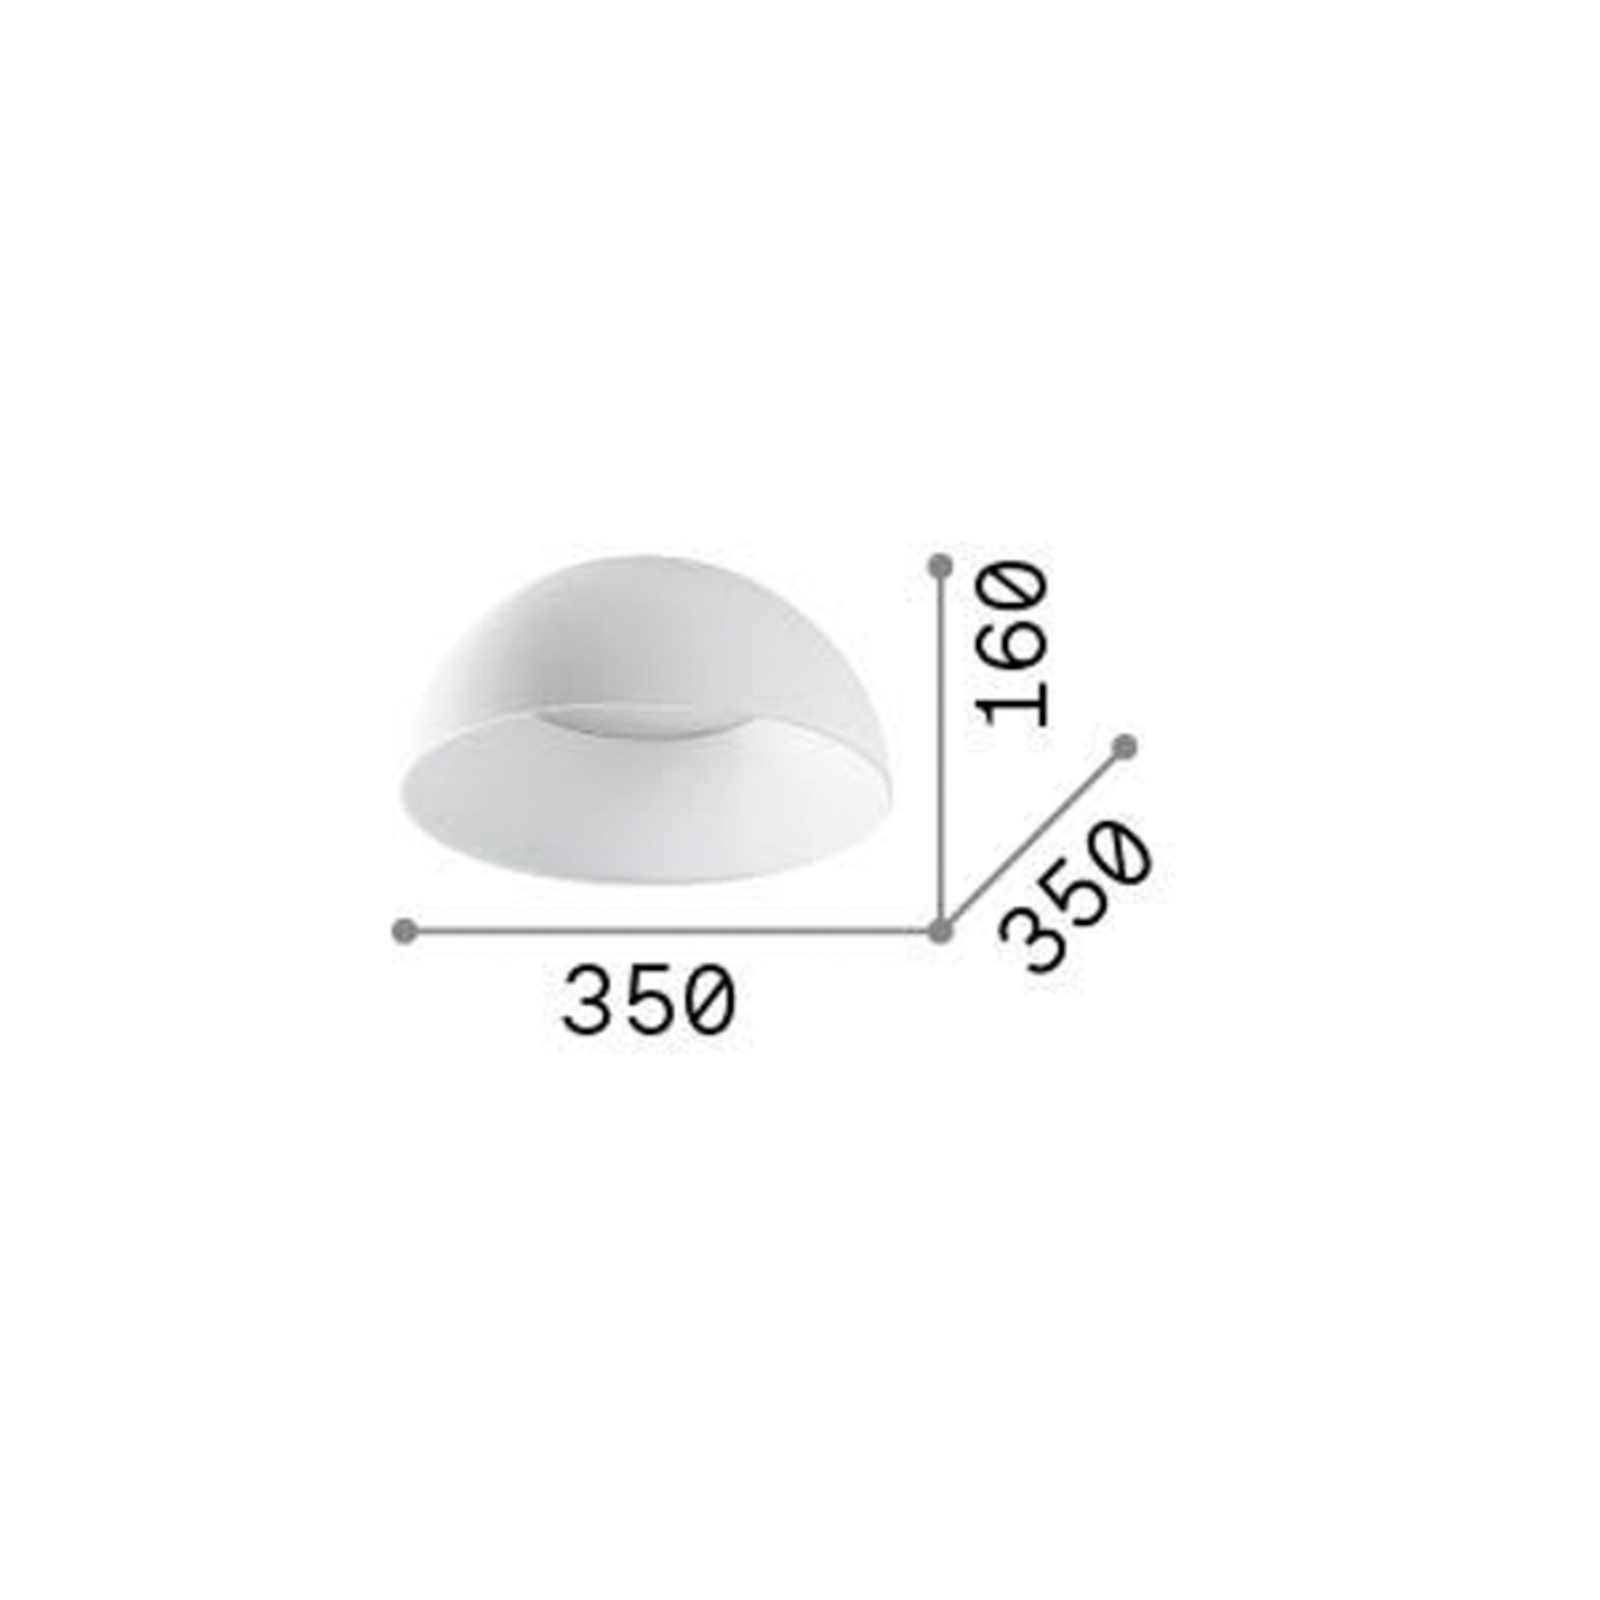 Ideal Lux Plafonnier LED Corolla-1, blanc, métal, Ø 35 cm